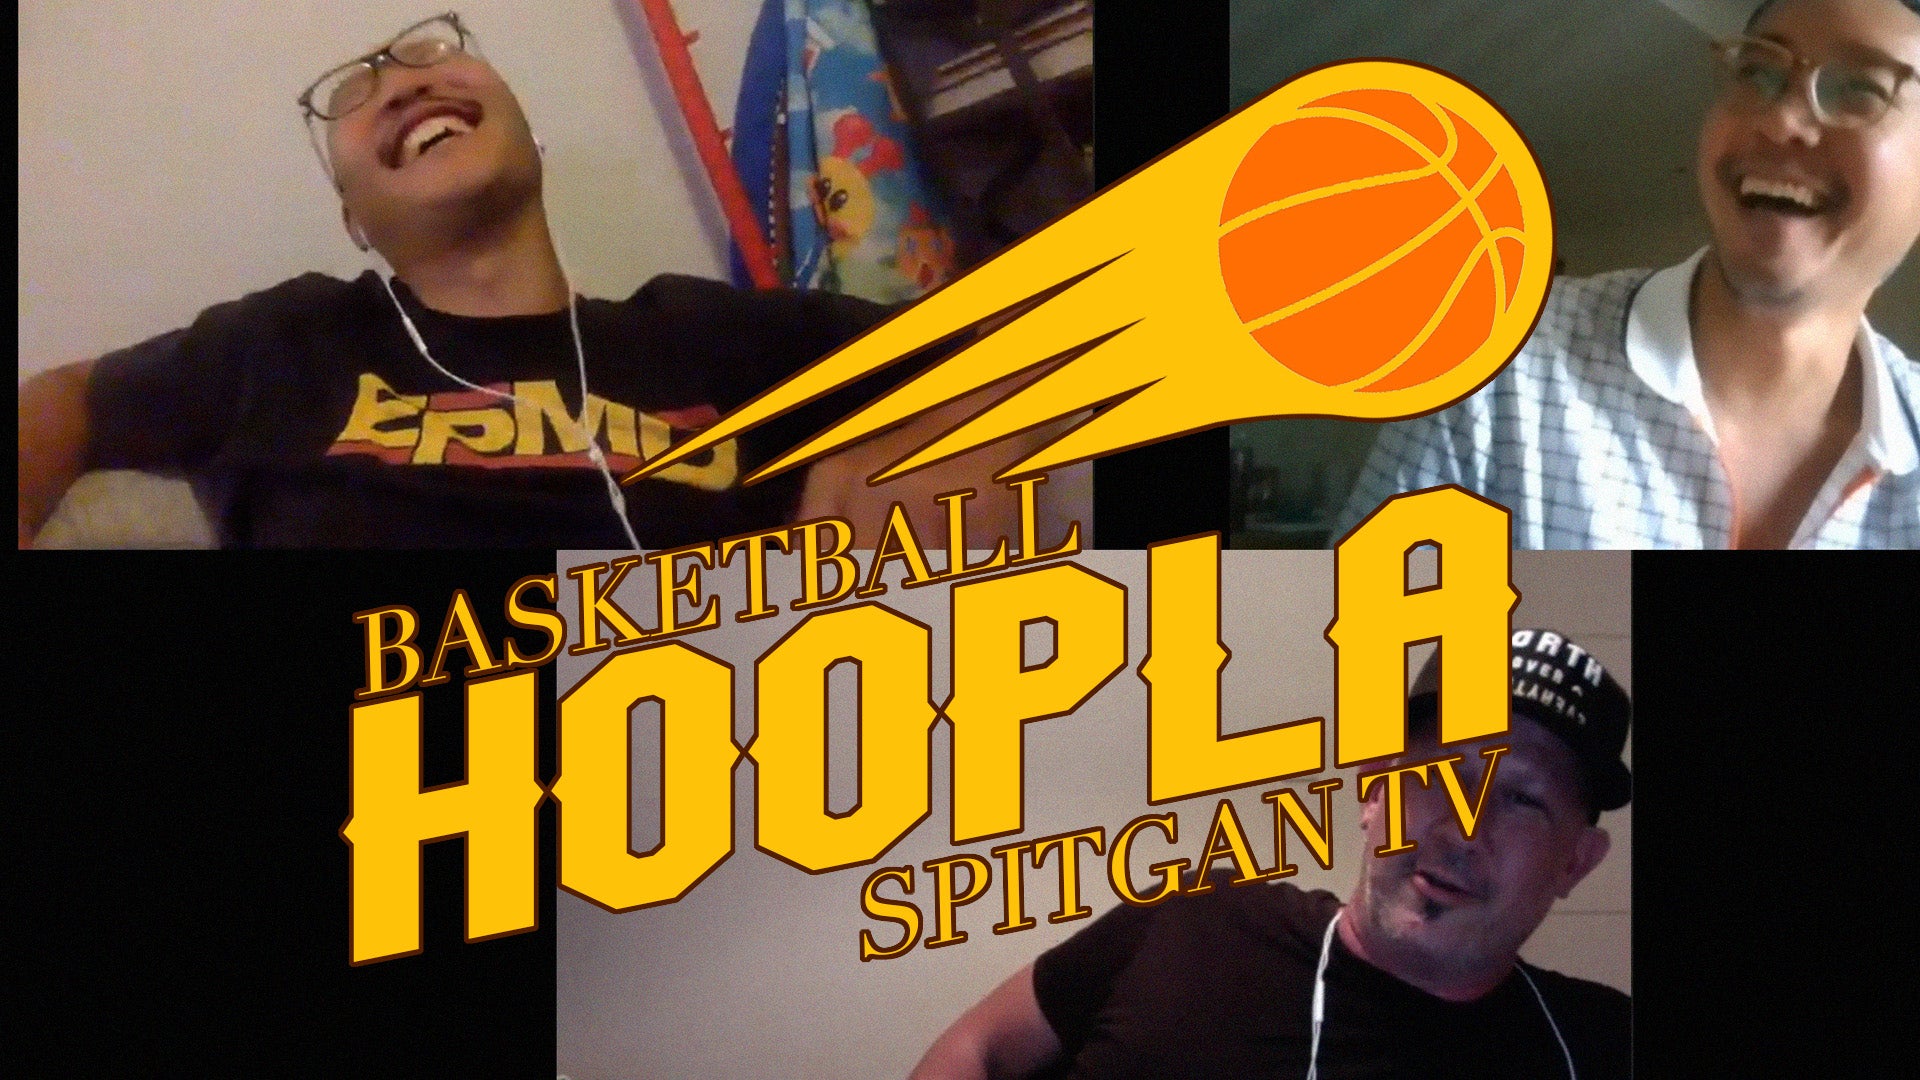 SPITGAN TV: BASKETBALL HOOPLA EP. 1